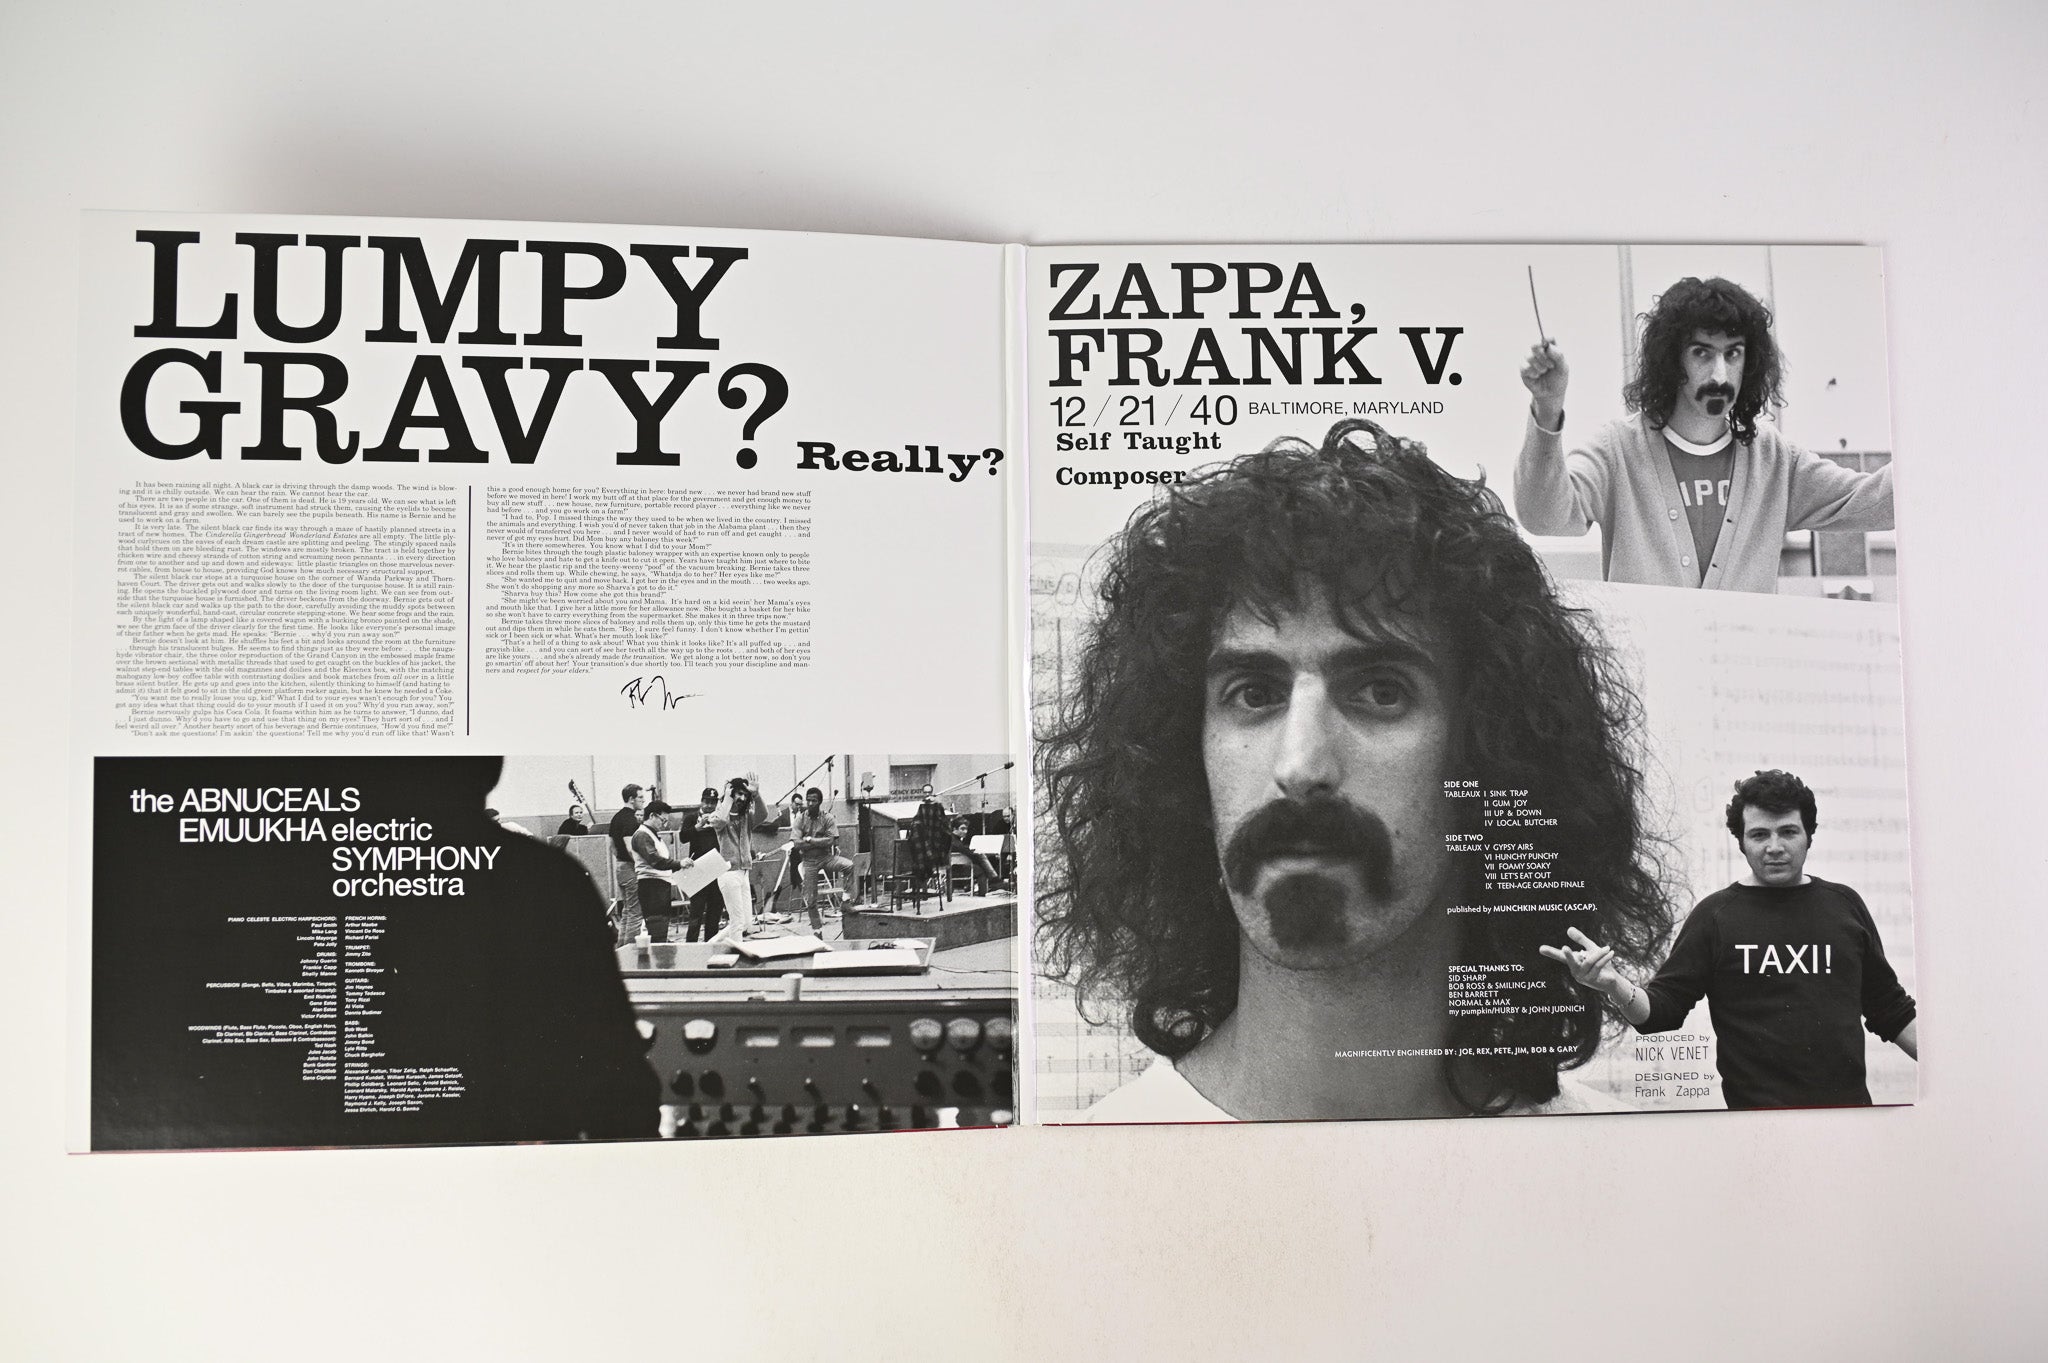 Frank Zappa - Lumpy Gravy Primordial Numbered Reissue on Zappa Records Burgundy Vinyl